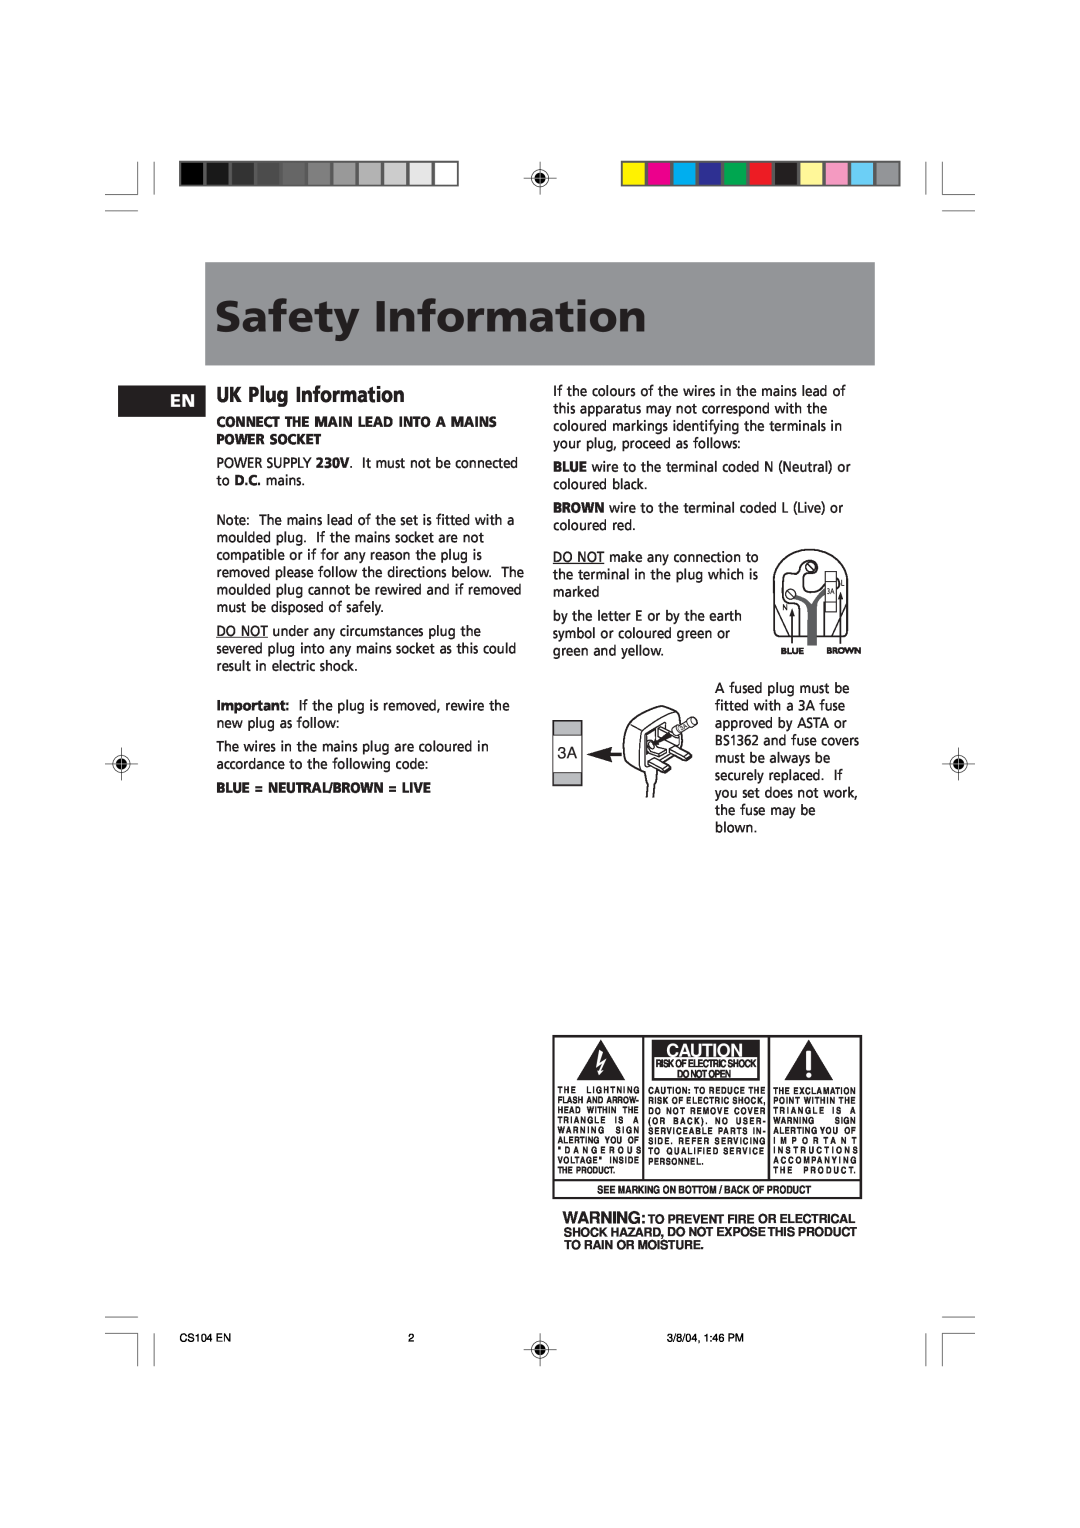 Technicolor - Thomson CS104 user service Safety Information, UK Plug Information, Blue = Neutral/Brown = Live 